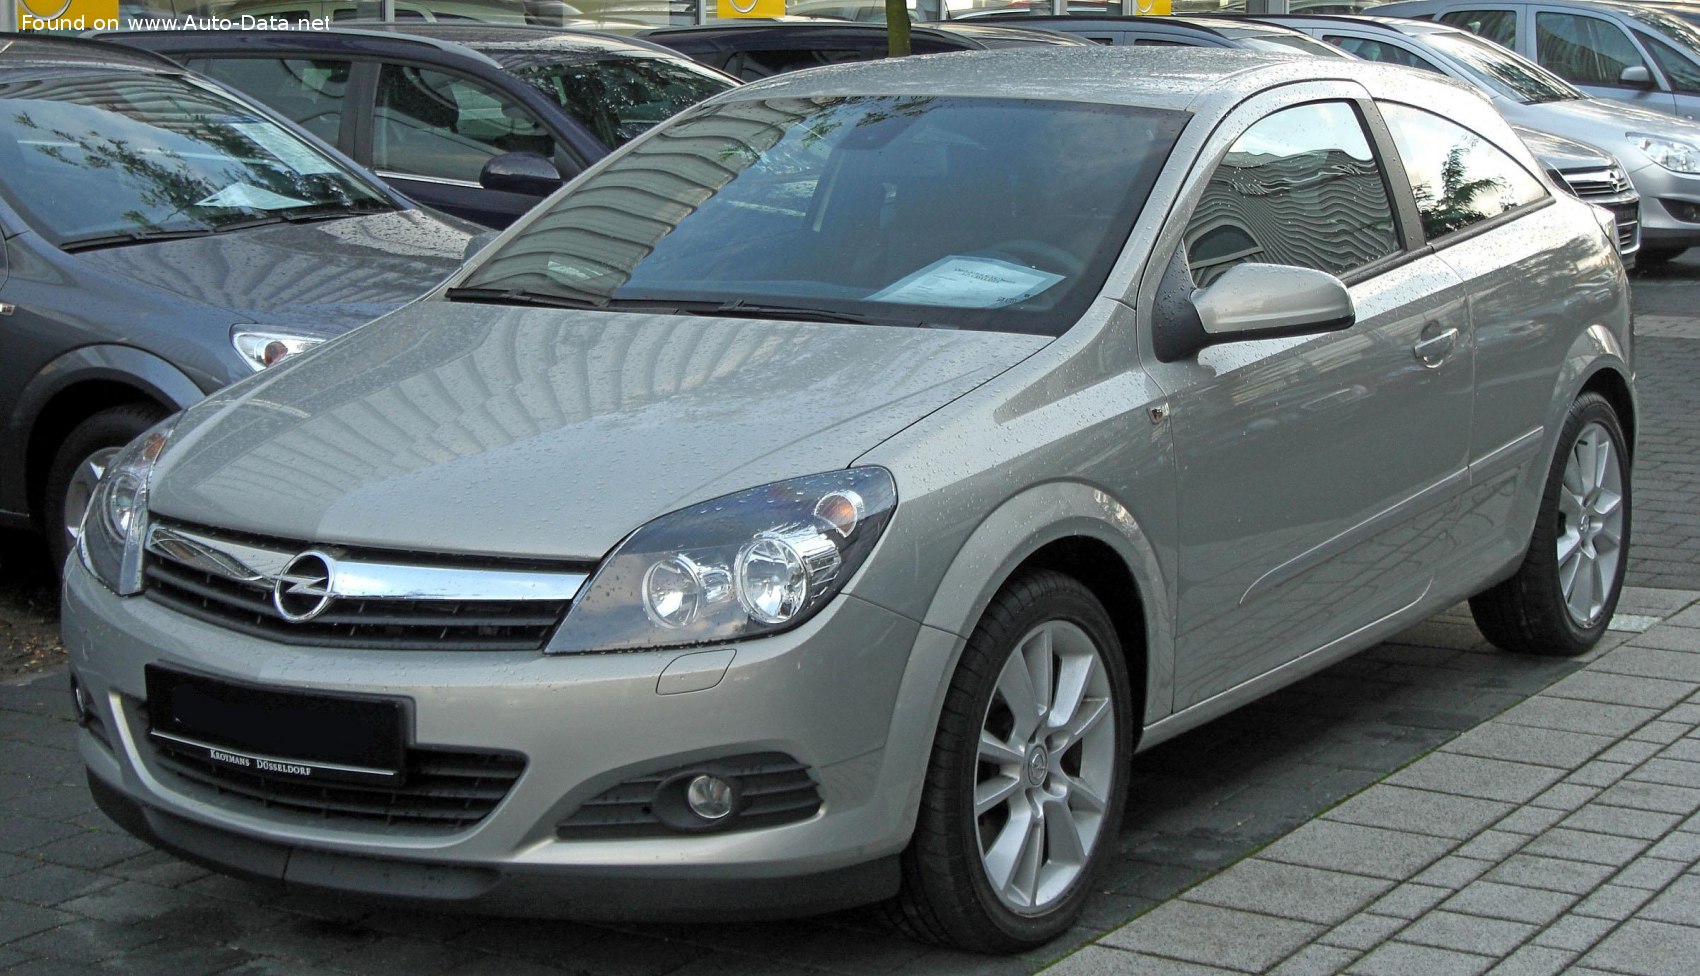 https://www.auto-data.net/images/f37/Opel-Astra-H-GTC_2.jpg